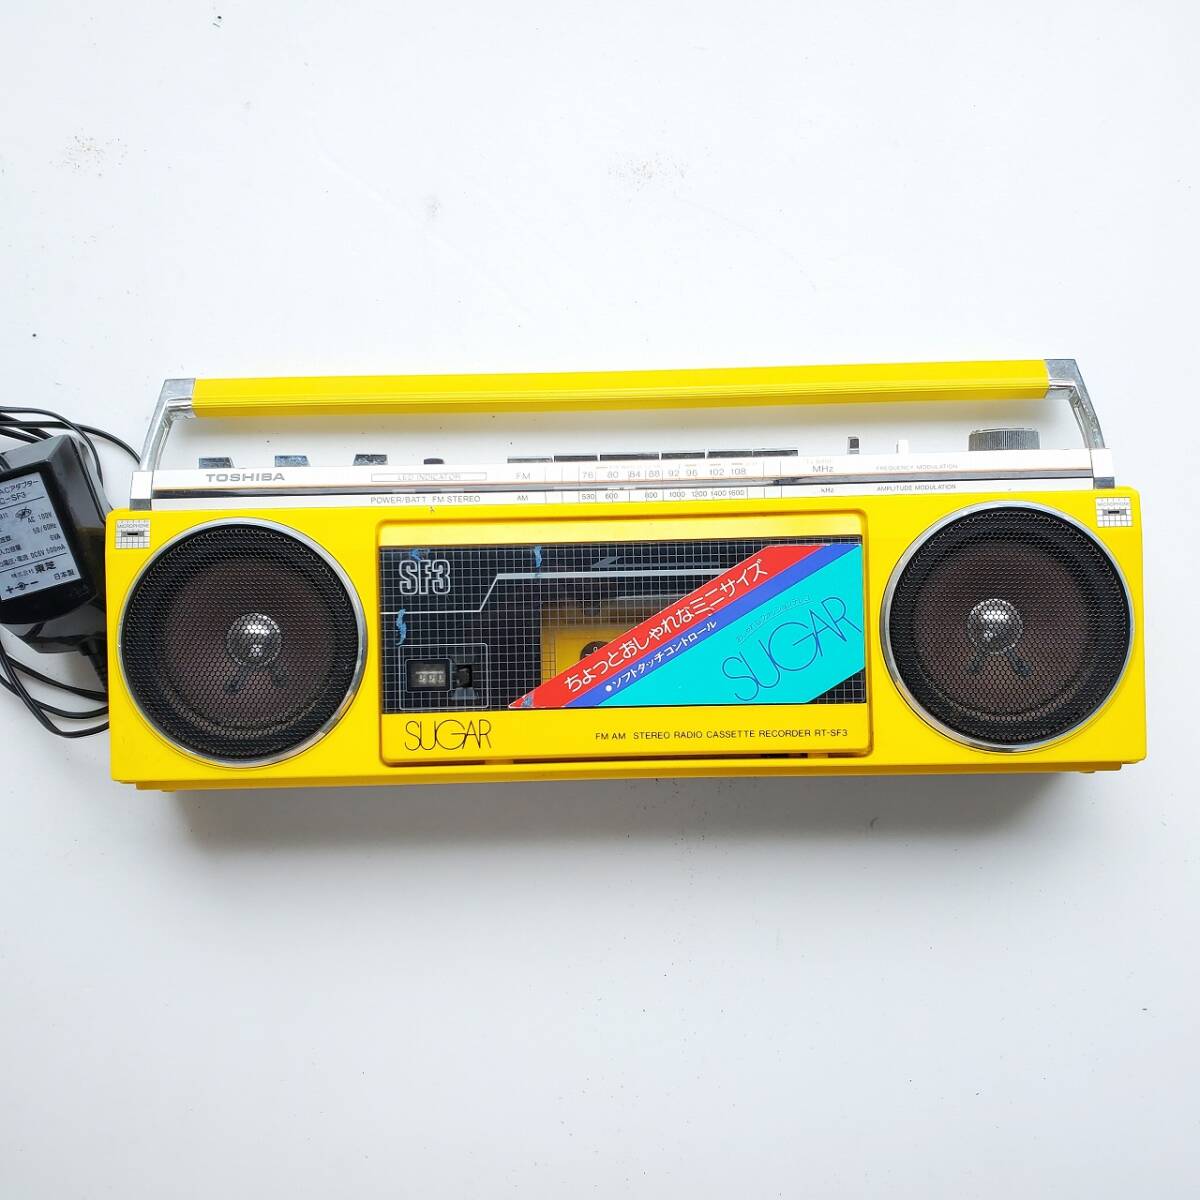  retro pop radio-cassette Toshiba RT-SF3 through electric work OK Showa Retro TOSHIBA stereo radio cassette recorder 